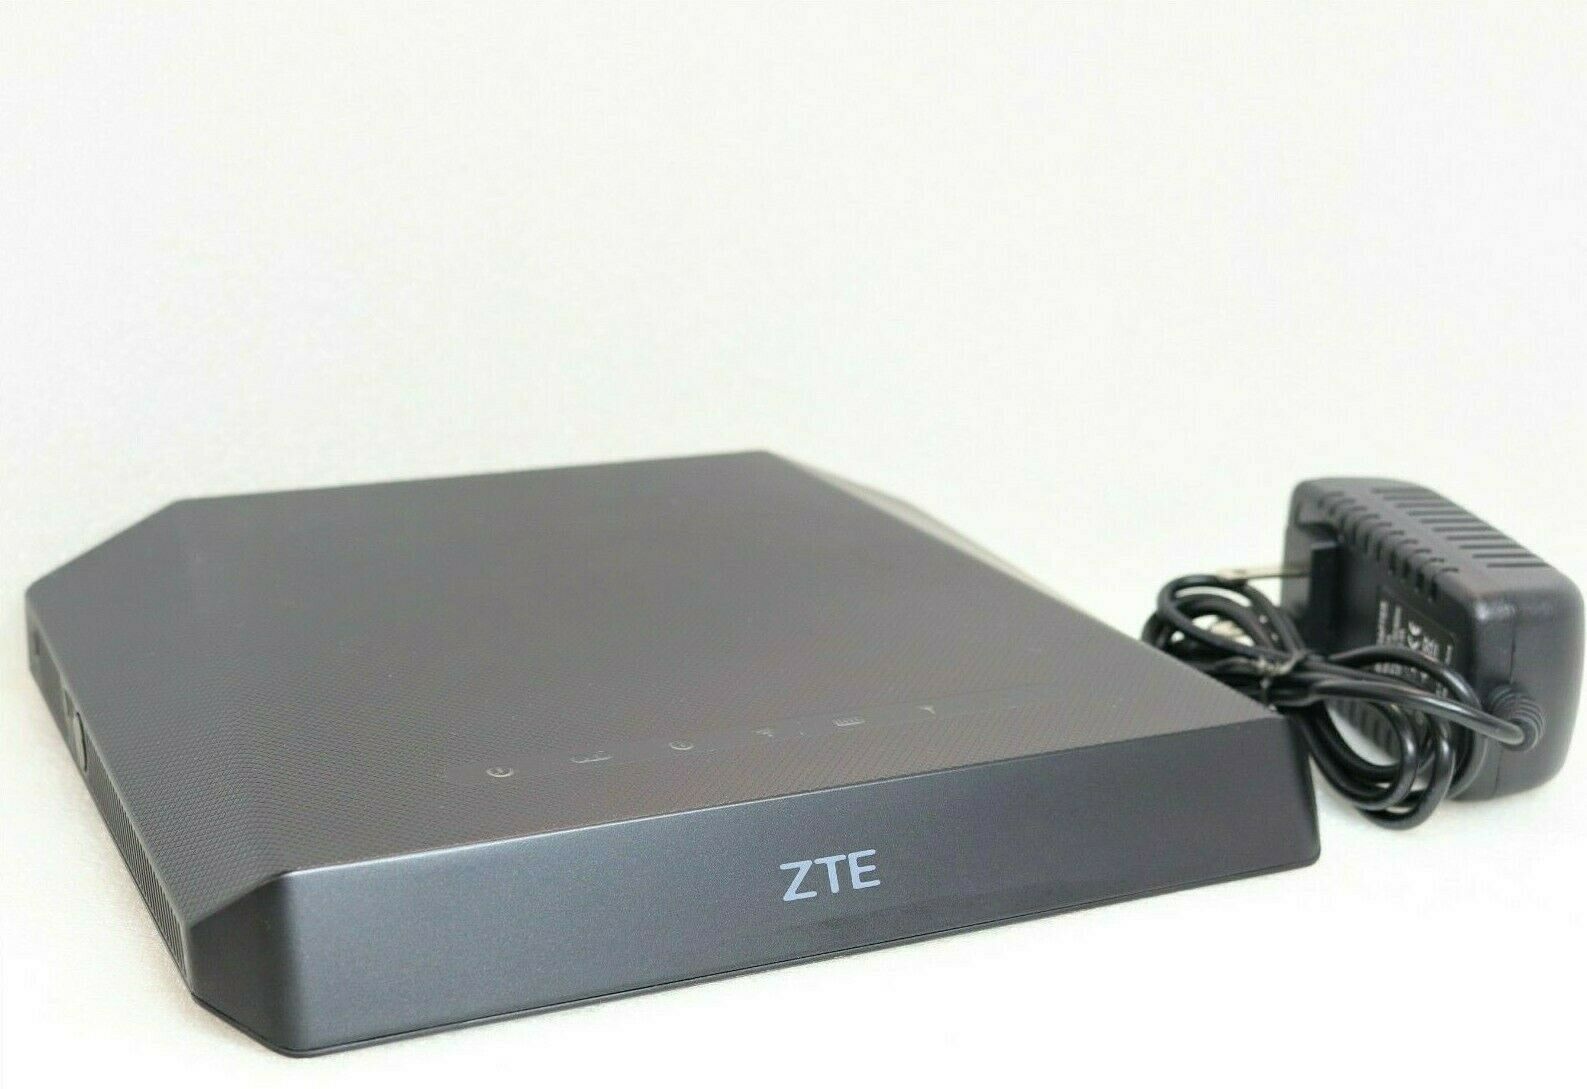 Zte Mf288 Turbo/rocket/smart Hub 4g Lte (gsm Unlocked) Phone Hotspot Wifi Router